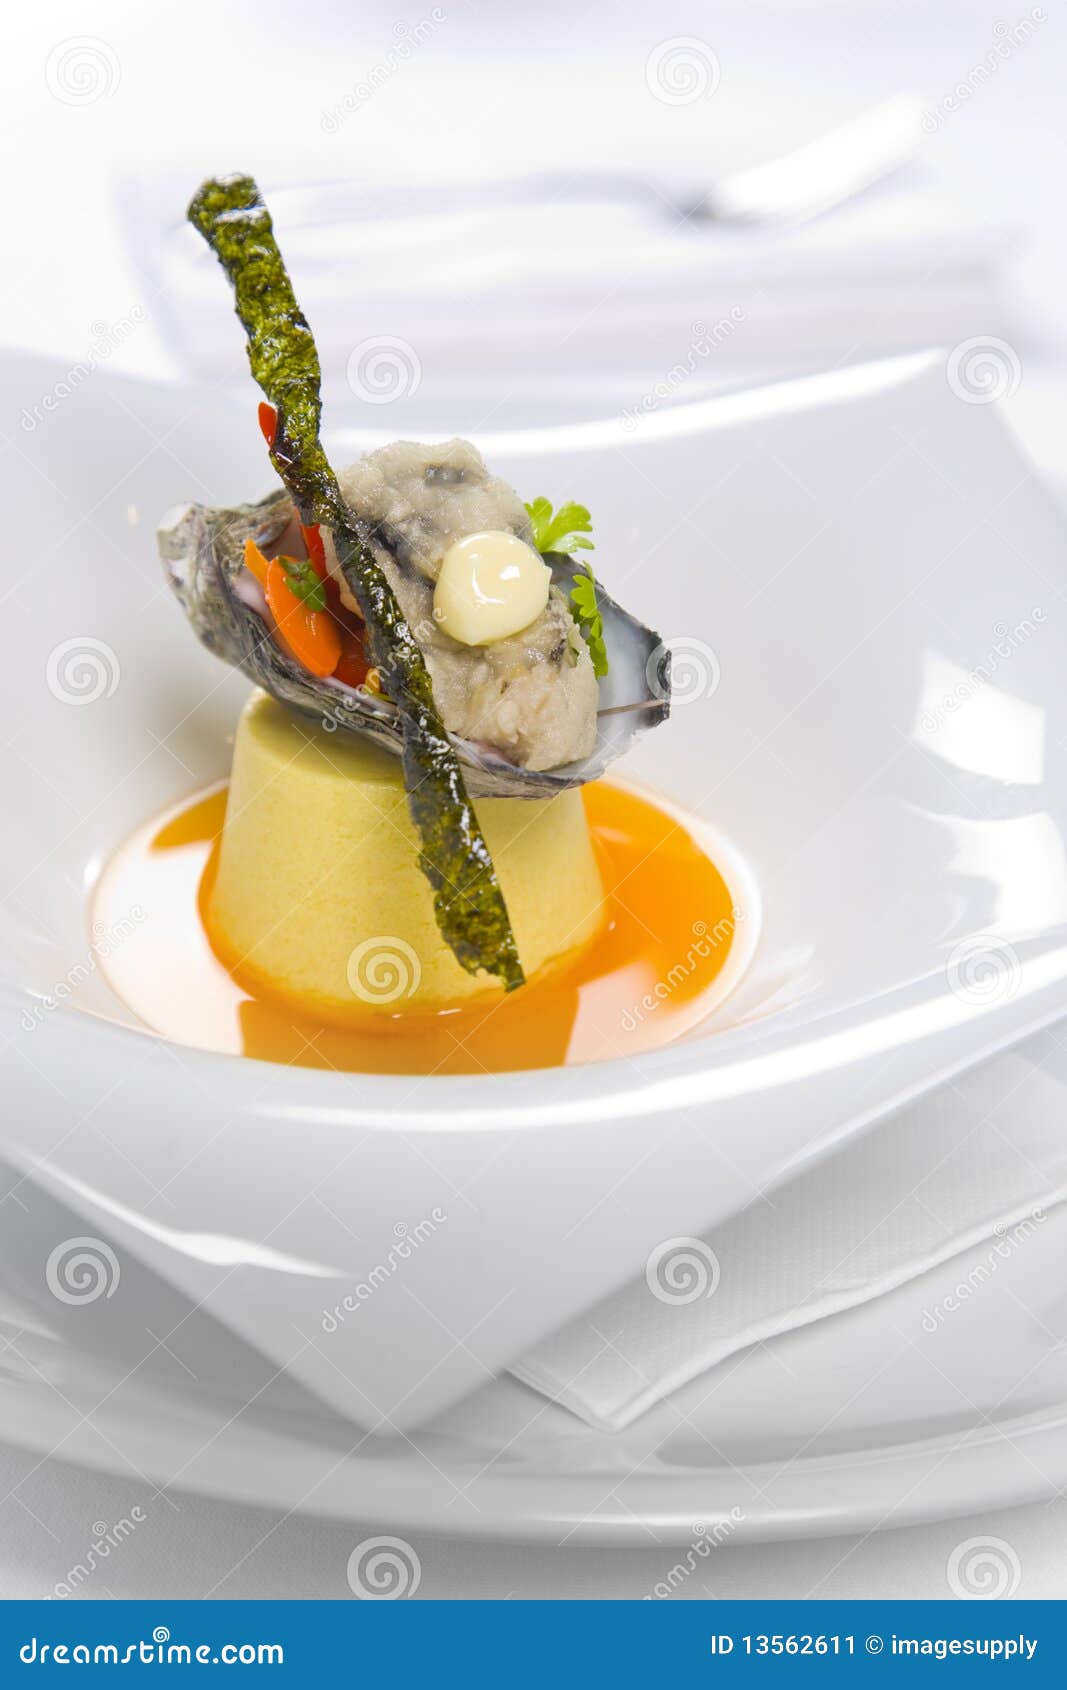 Oysters Kilpatrick stock image. Image of modern, marinated - 13562611